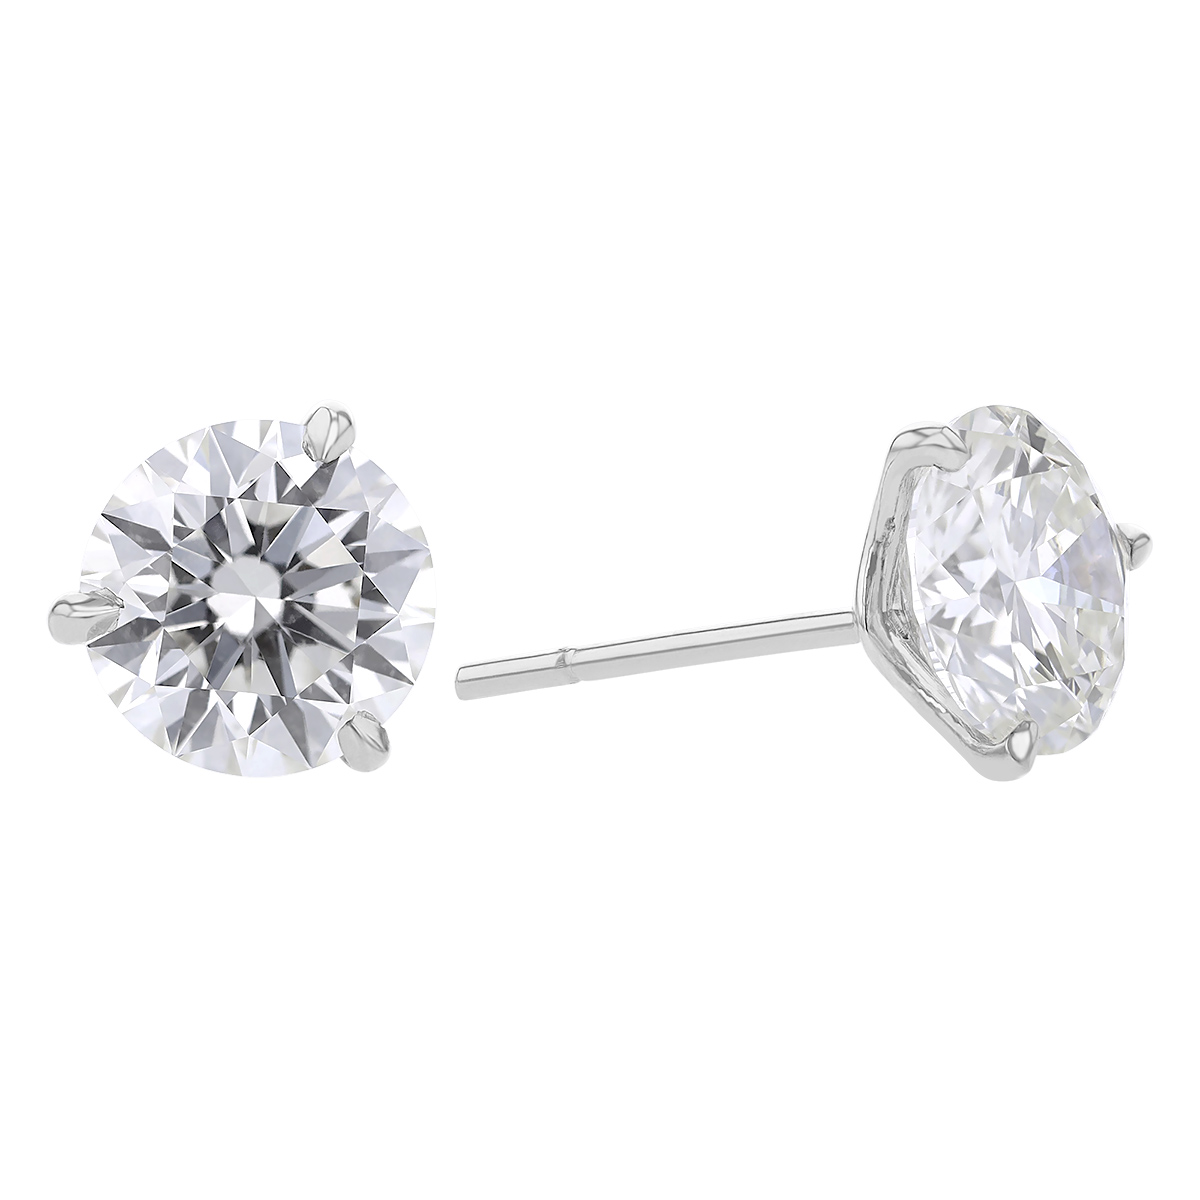 Rahaminov Round Diamond Stud 4 Prong Earrings in White Gold, 3.06 cttw ...